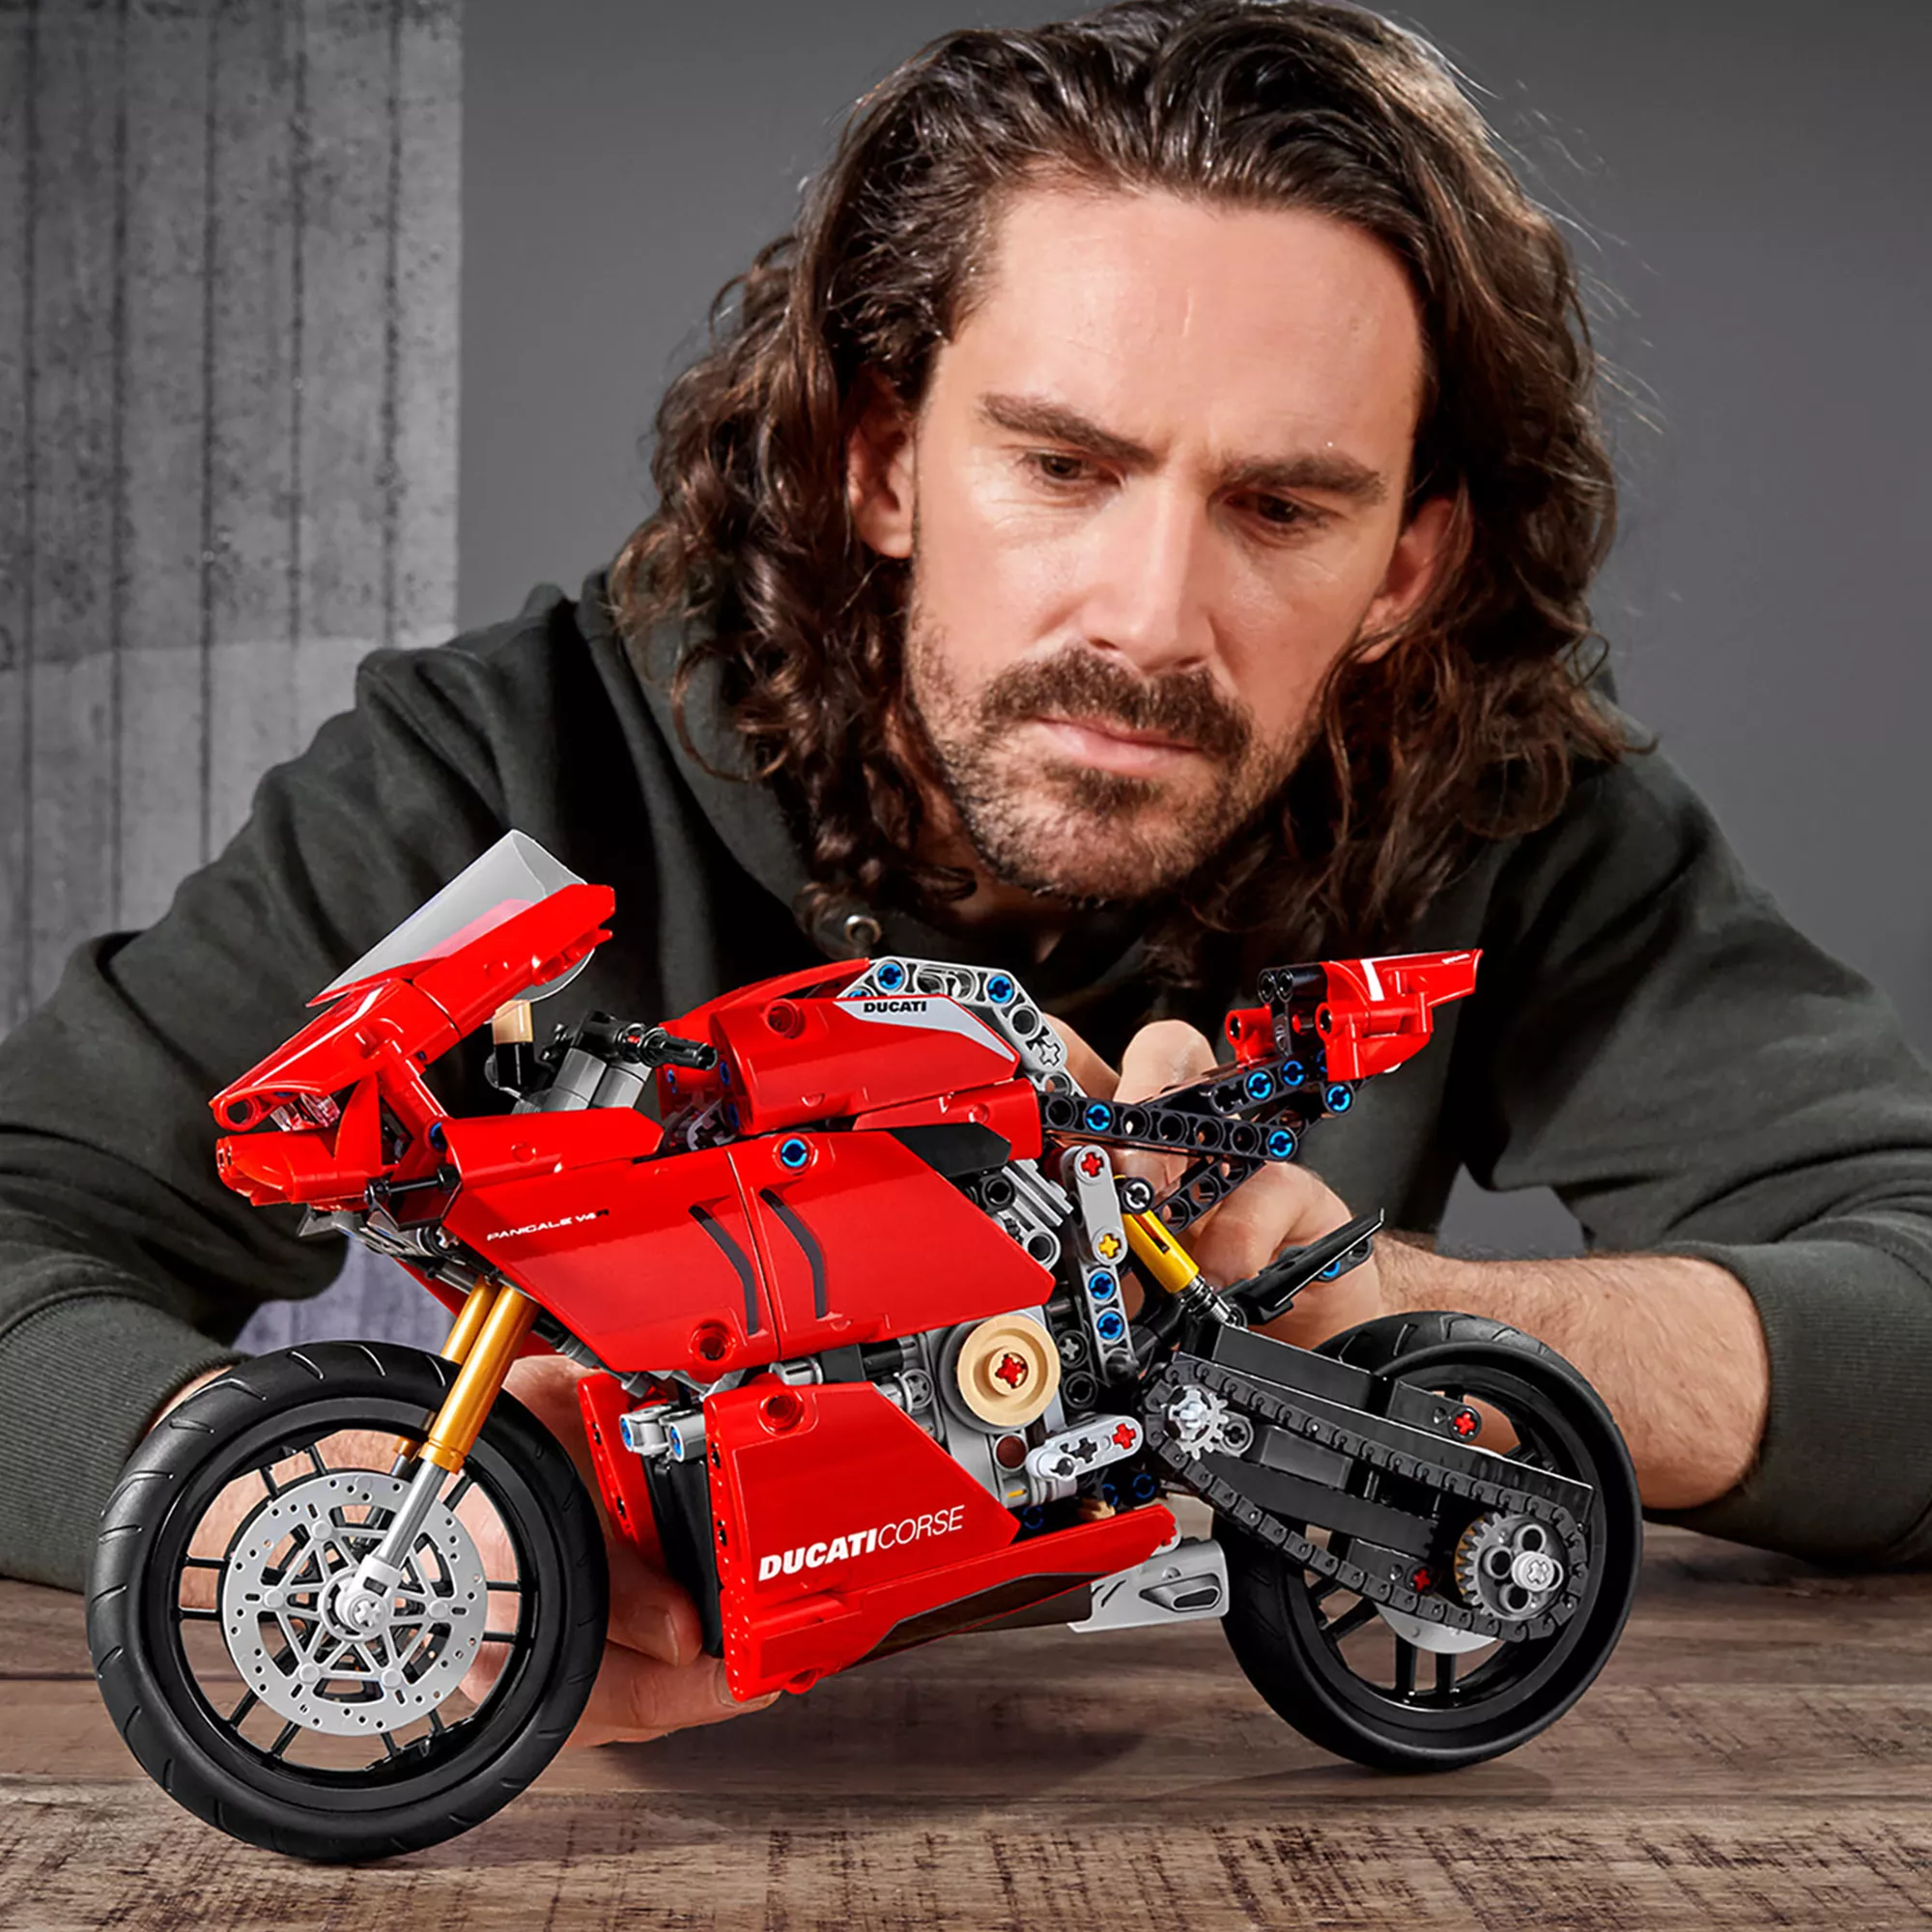 LEGO 42107 Technic Ducati Panigale V4 R